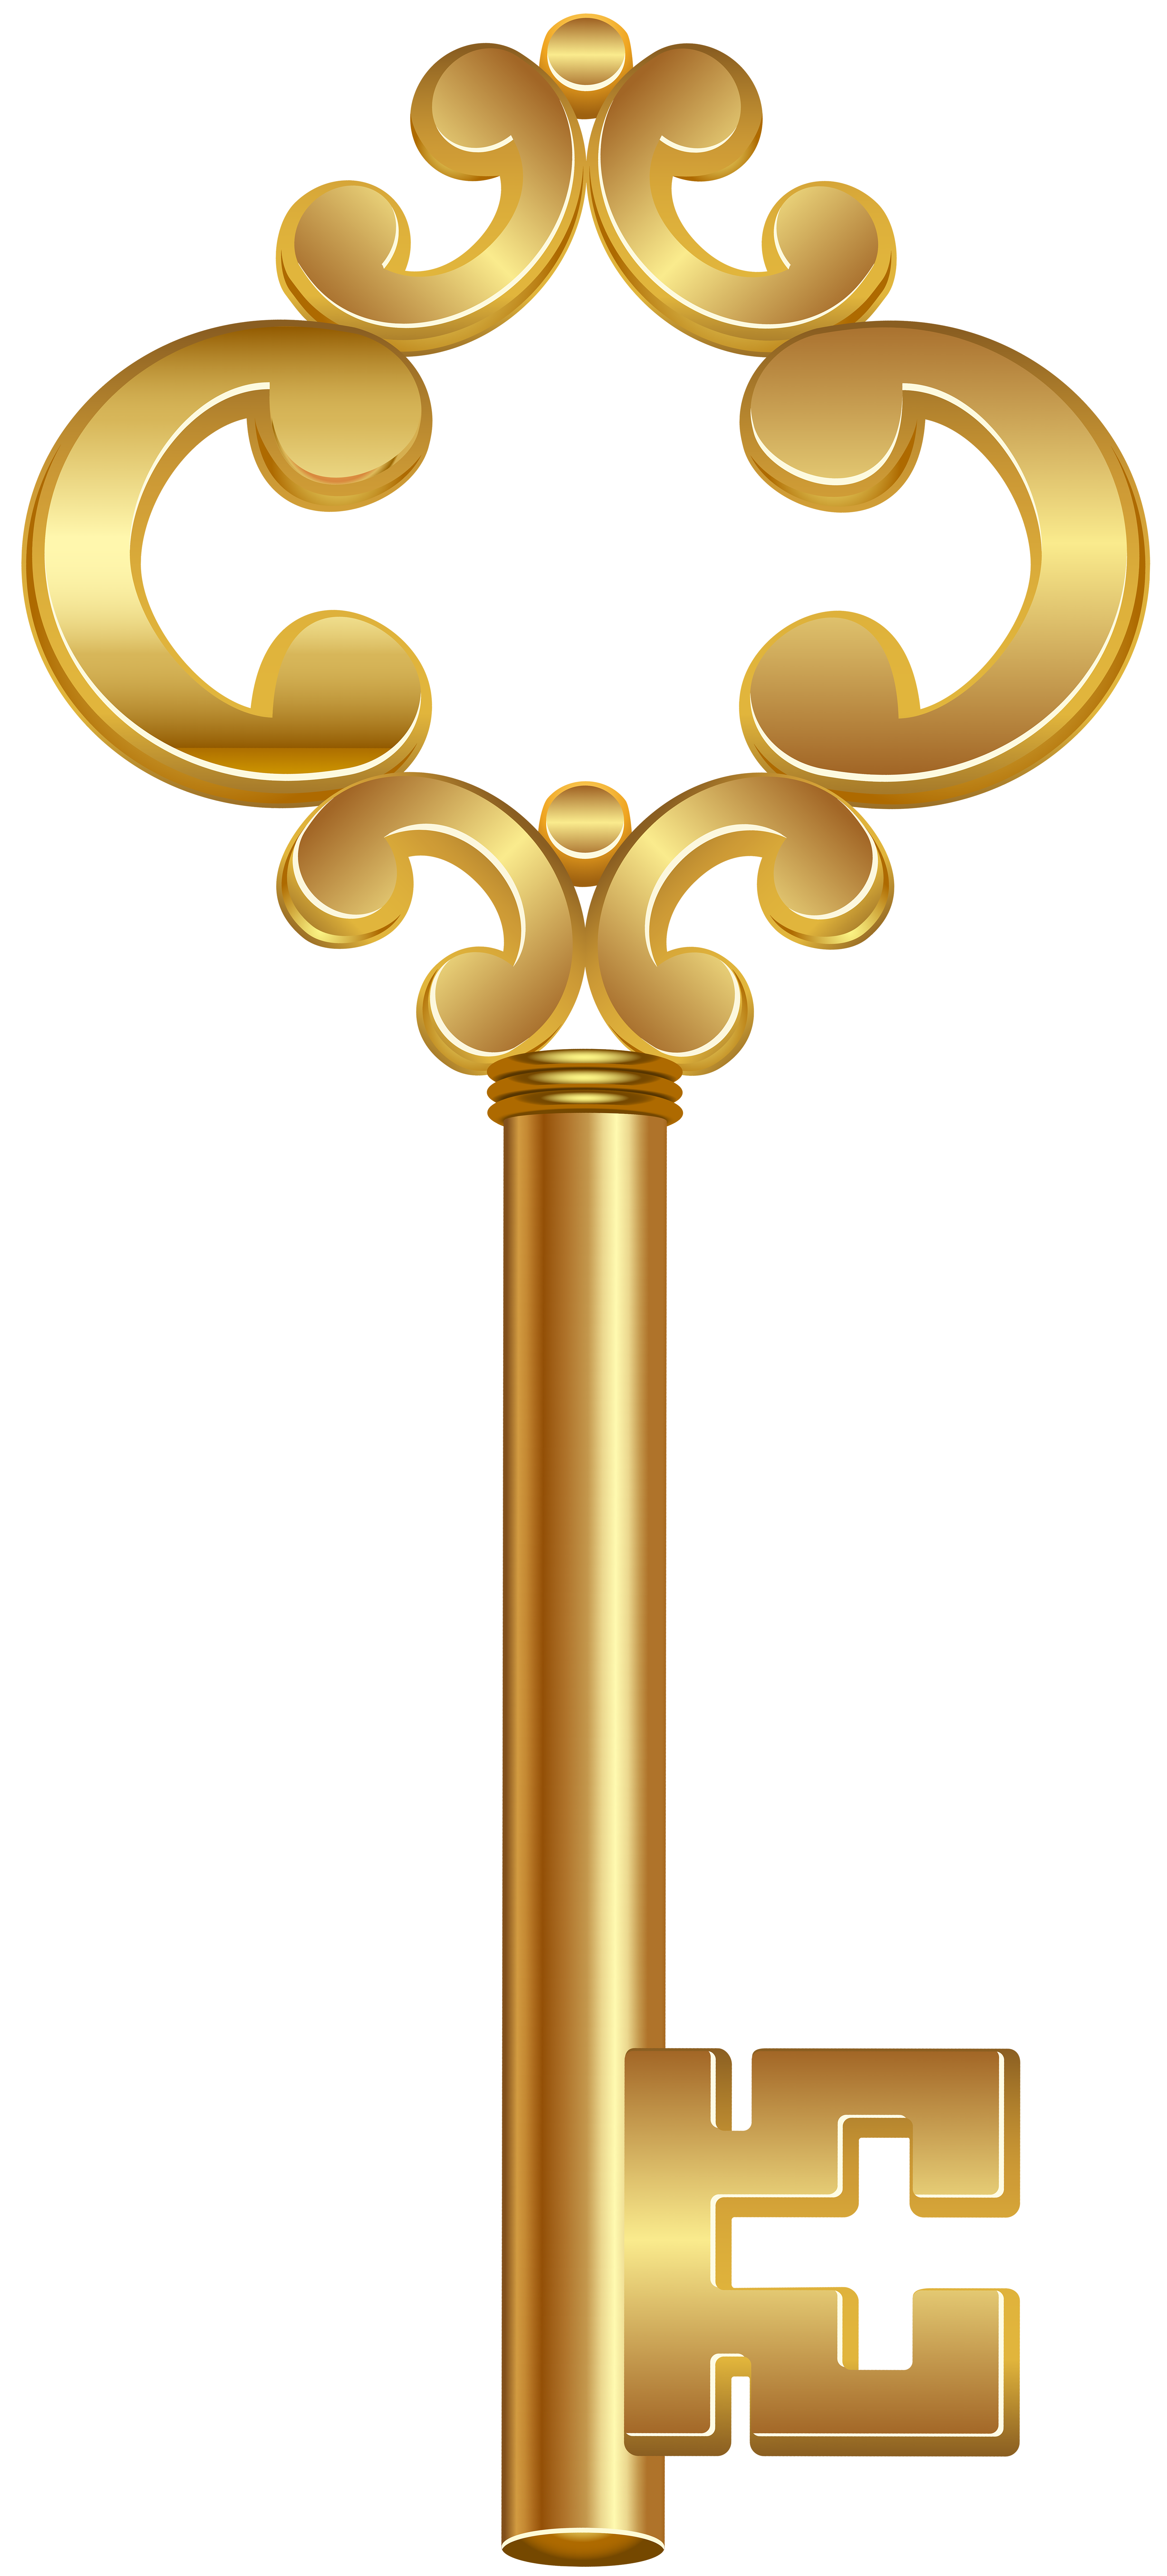 Gold Key PNG Clip Art Image.